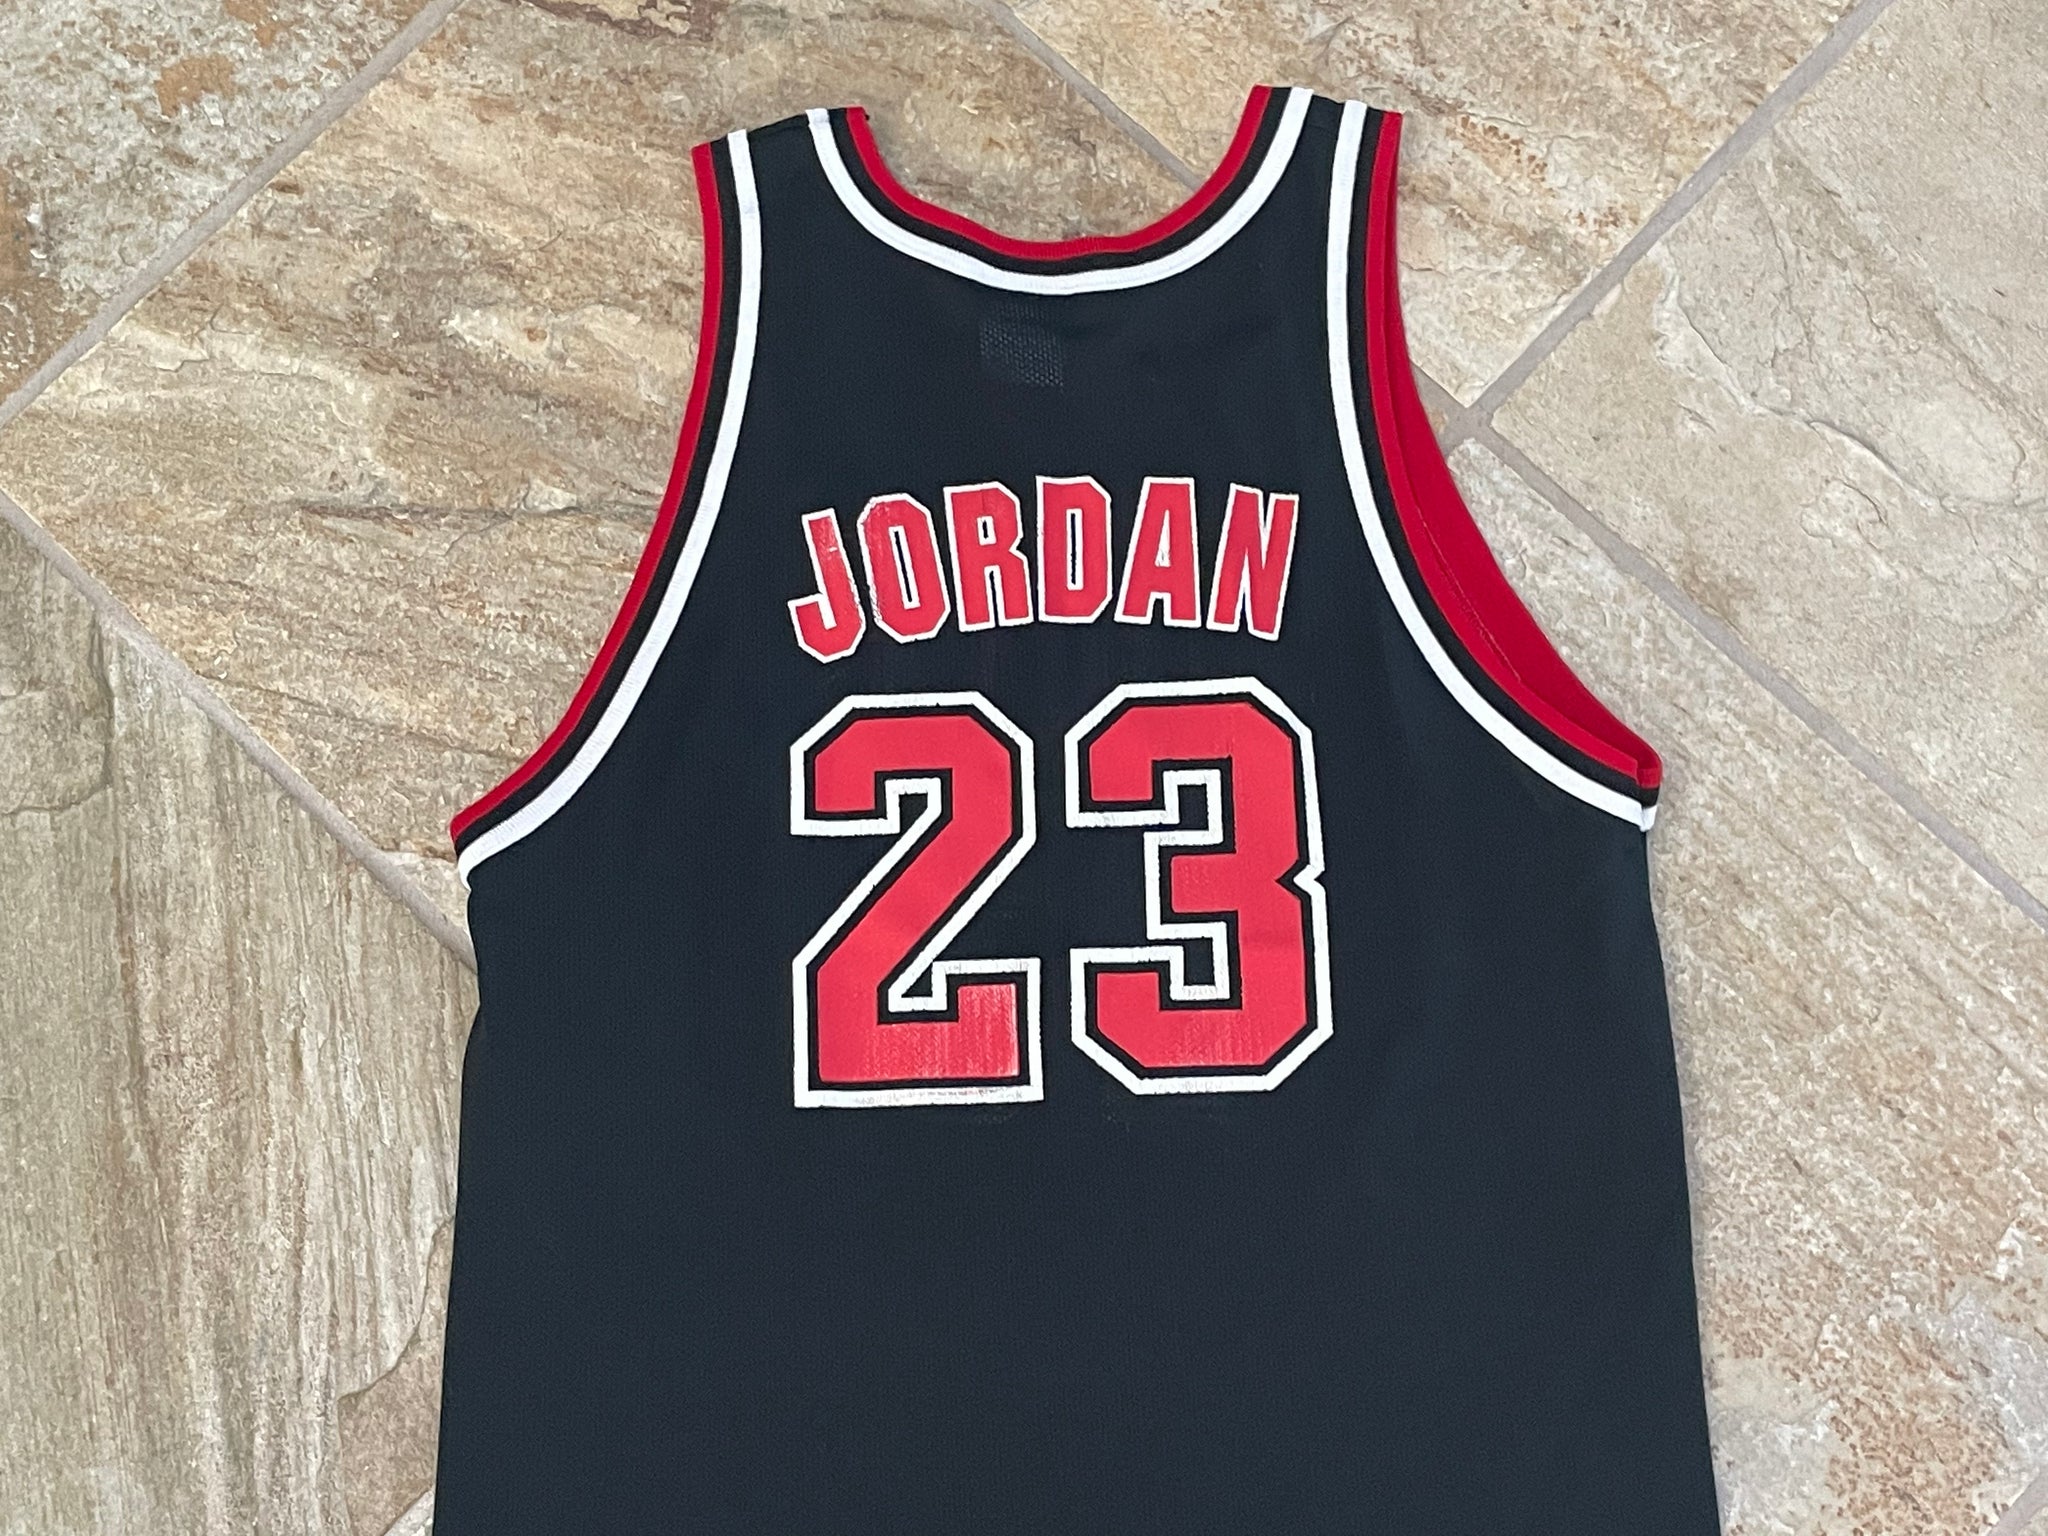 Youth Kids Jordan Basketball Uniform - Jersey & Shorts - Bulls